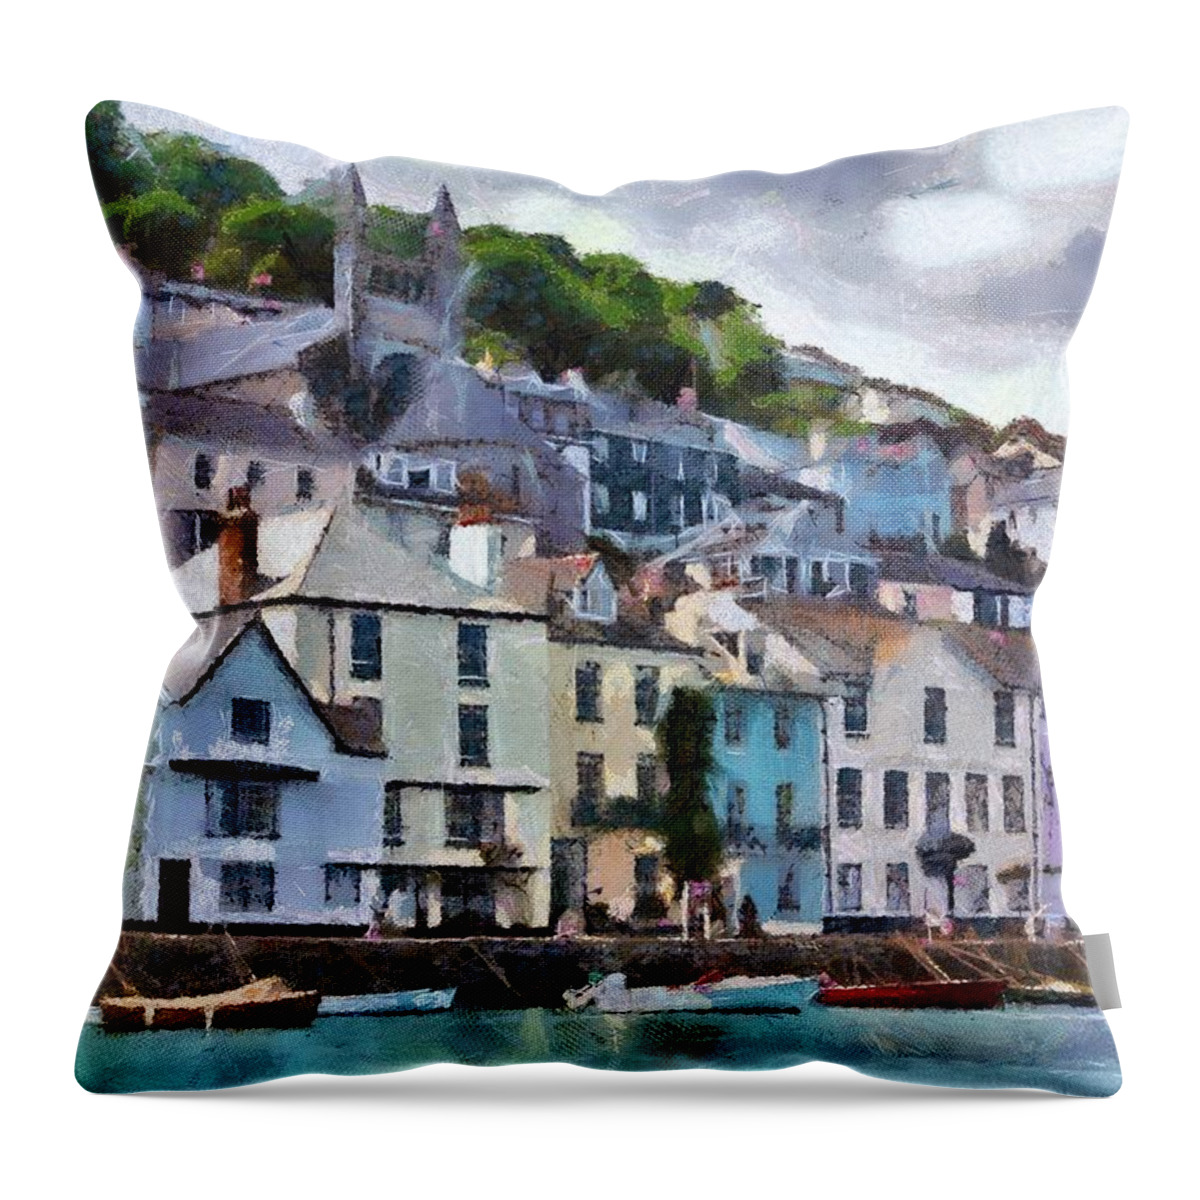 Digital Throw Pillow featuring the digital art Dartmouth Devon by Charmaine Zoe